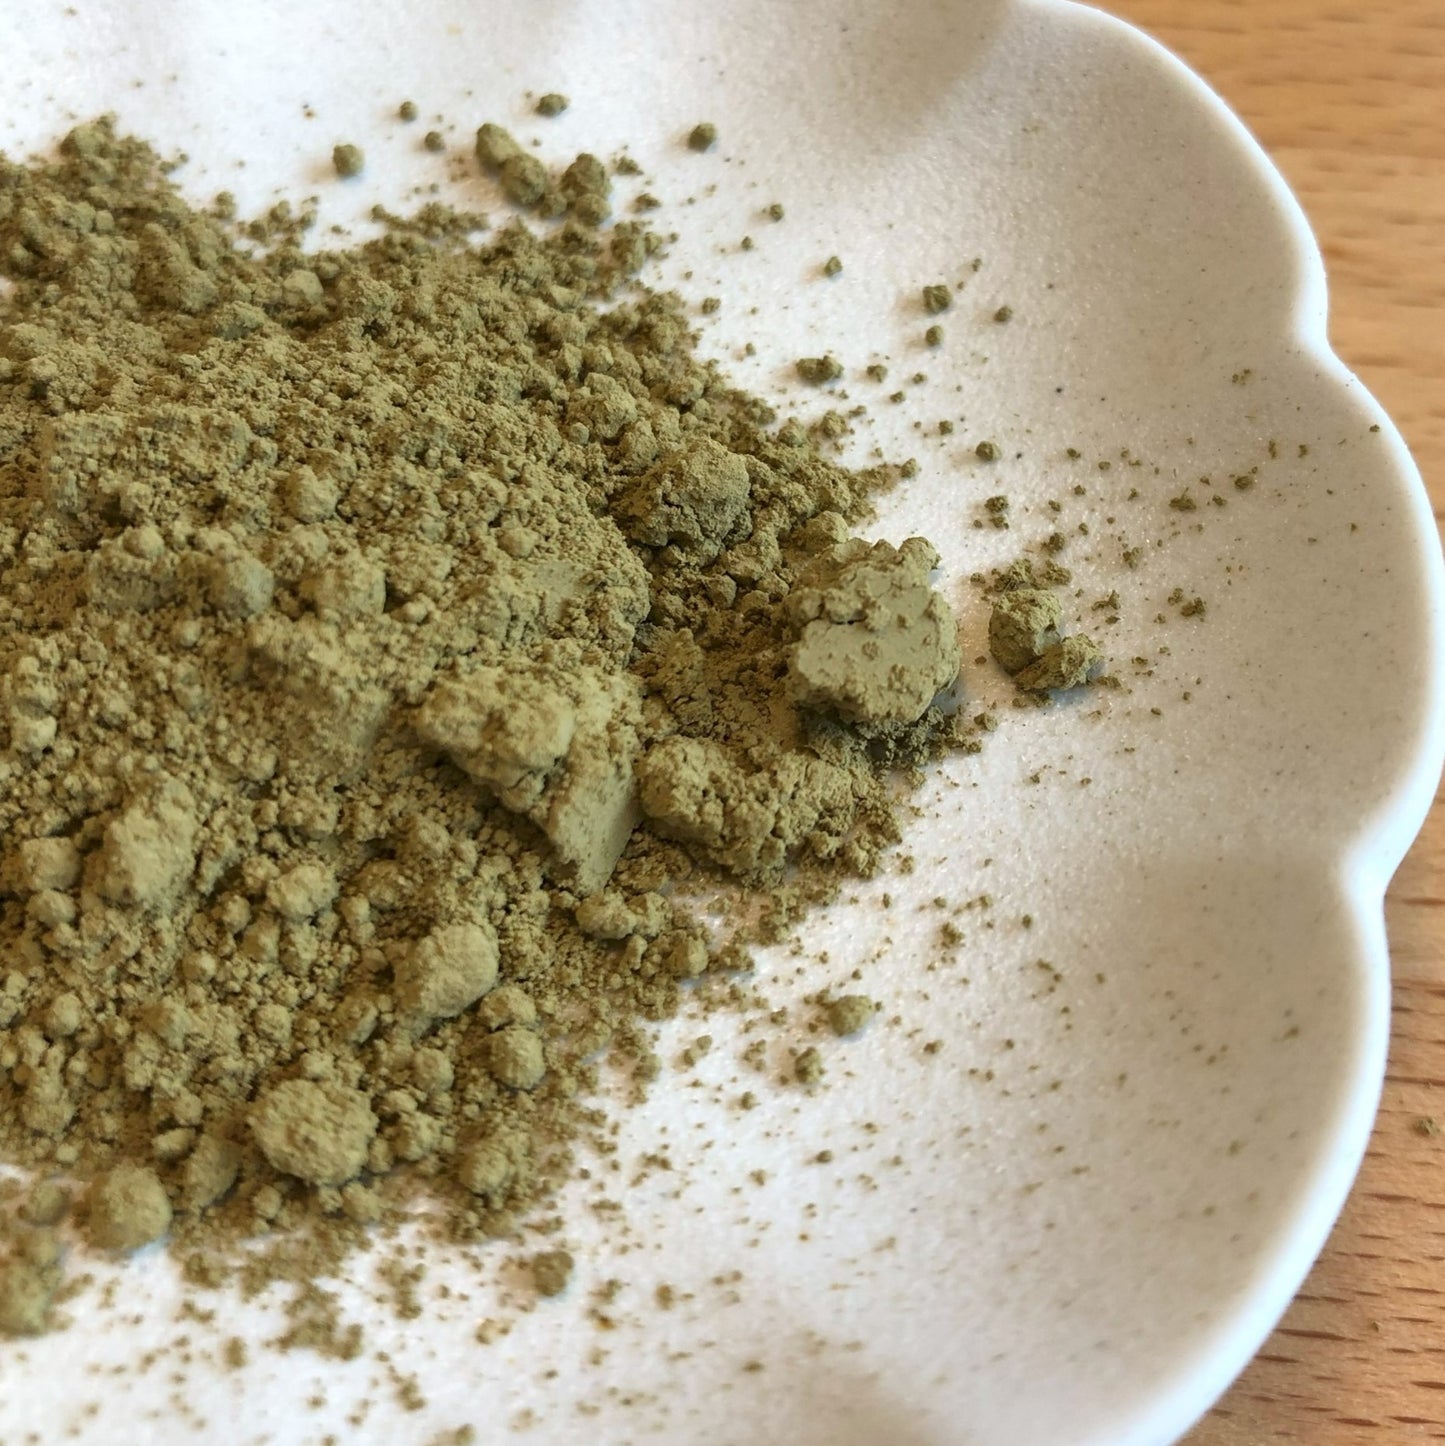 Superior Grade Organic Bo Houjicha/Hojicha green tea powder (roasted sencha green tea) from Japan 1kg (2.2lbs) bag - ShiZen Tea